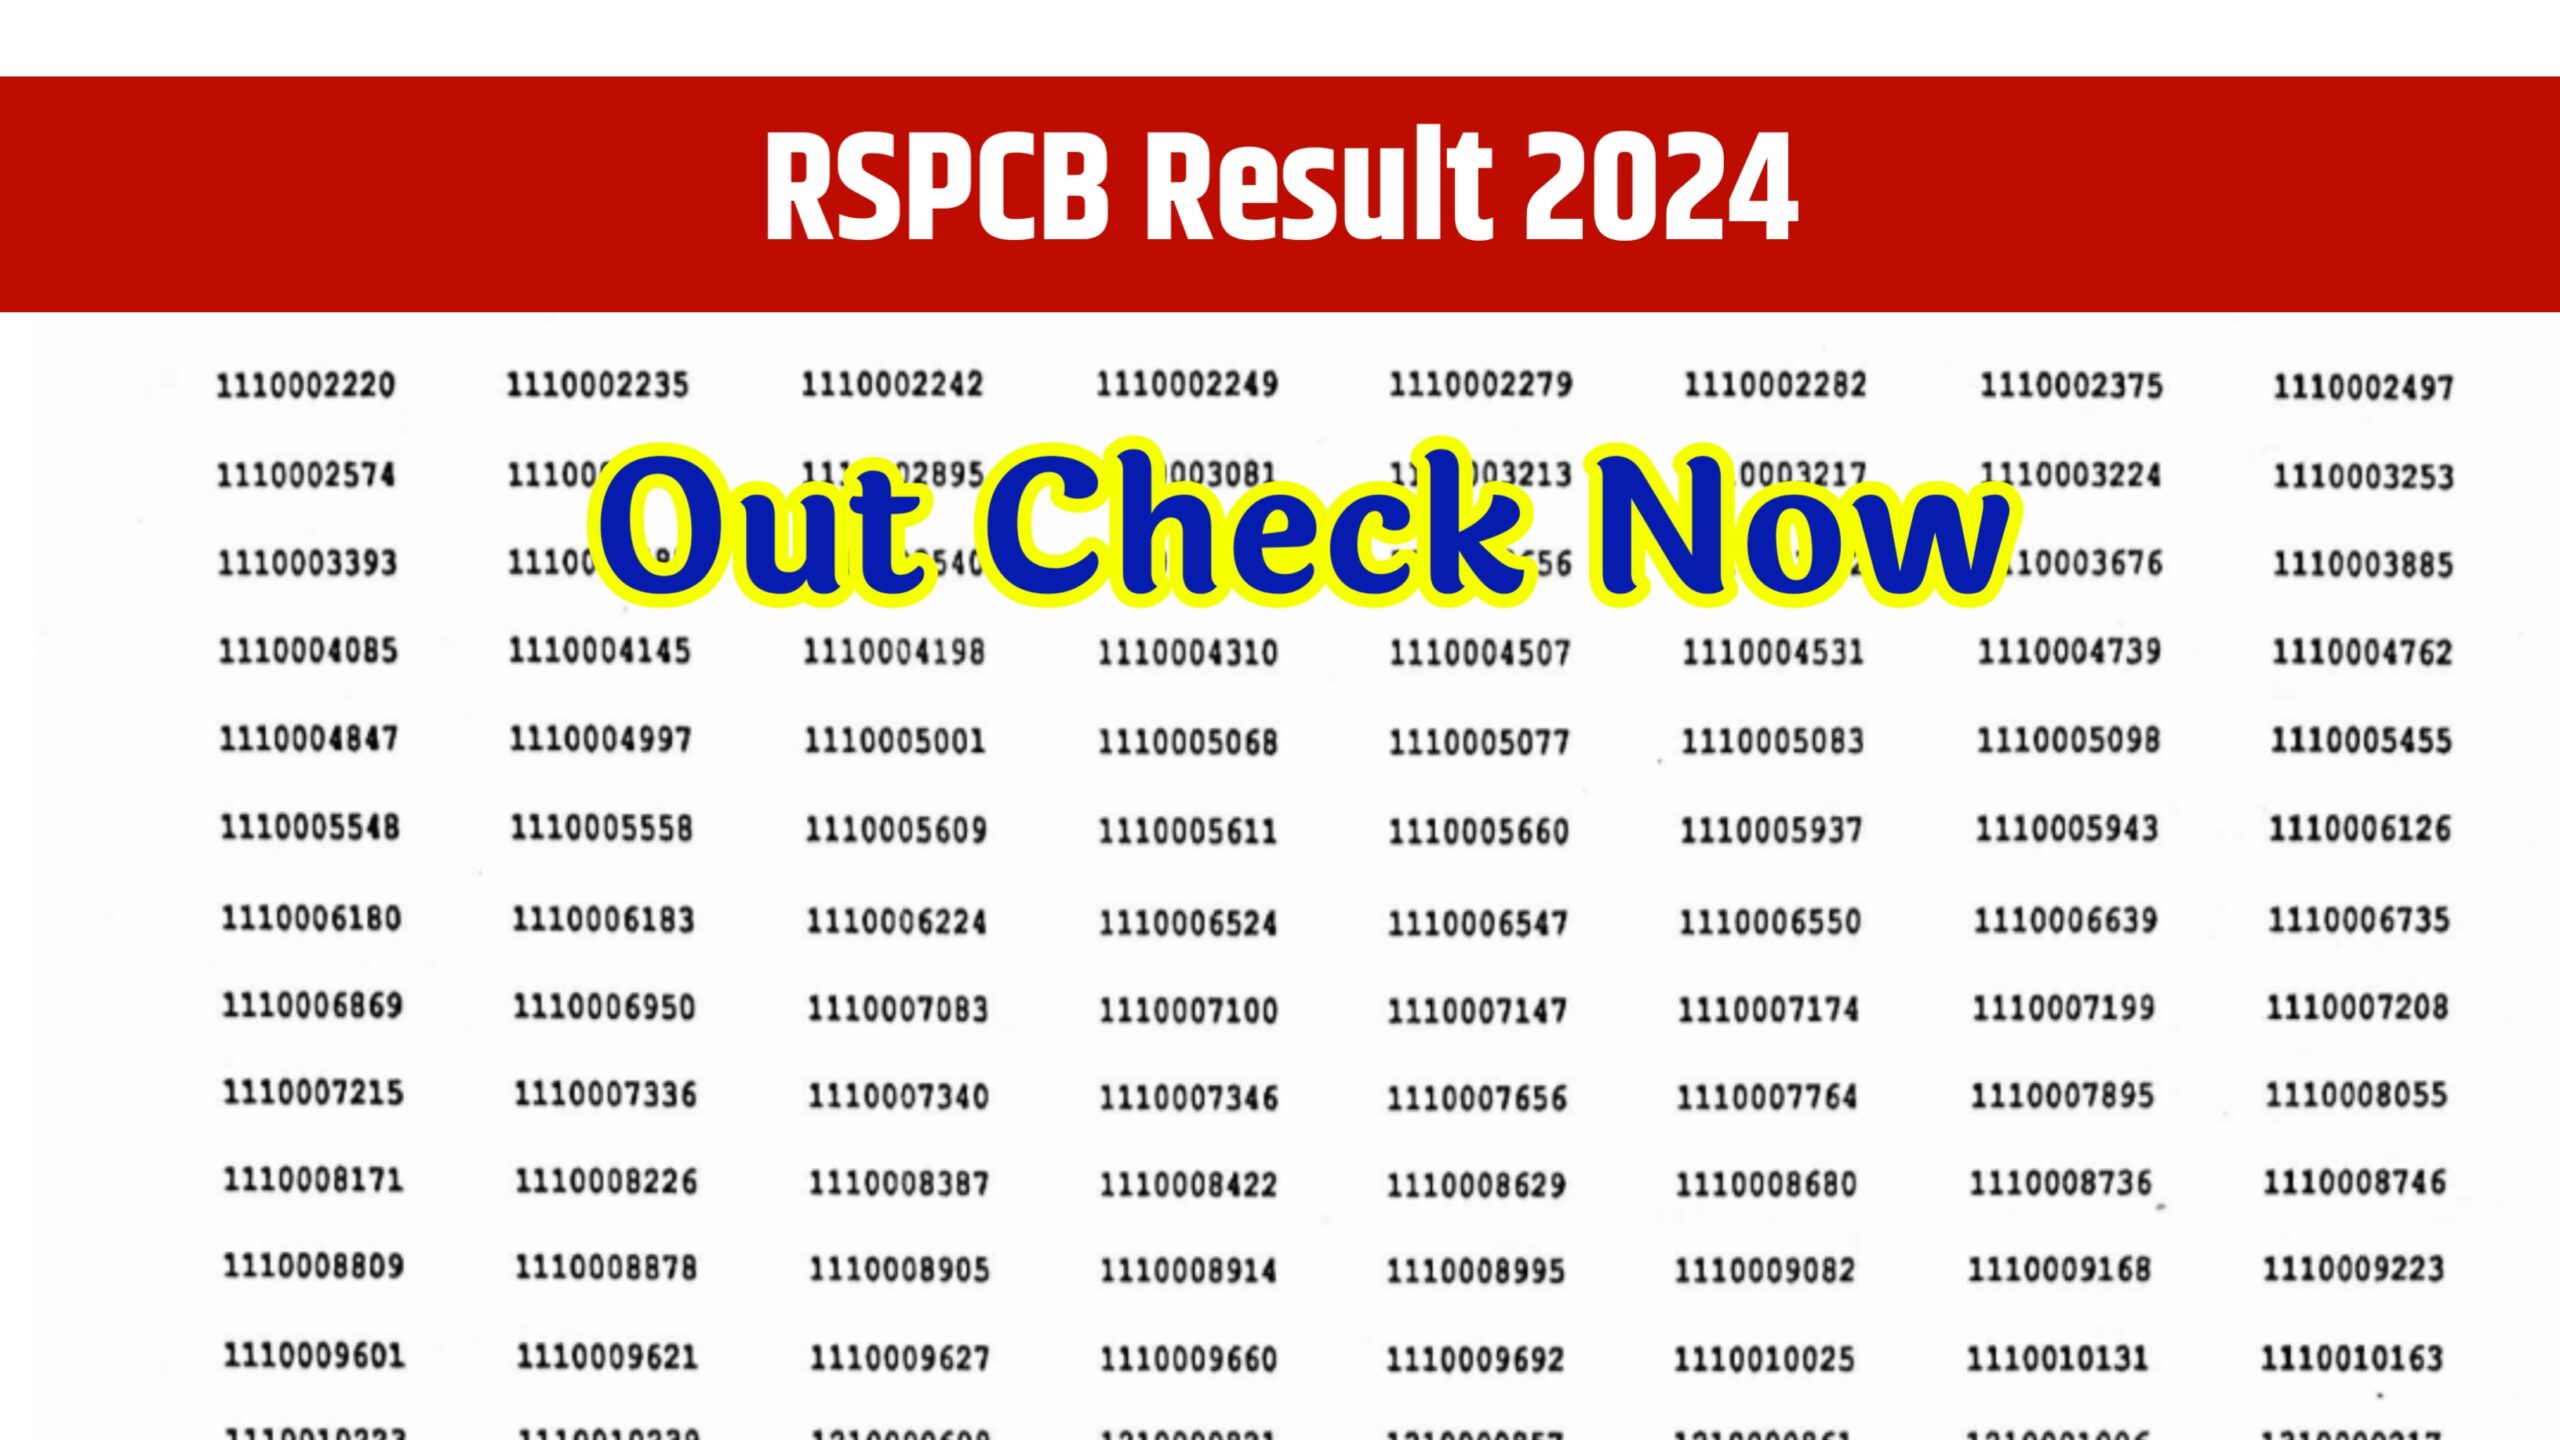 RSPCB Result 2024